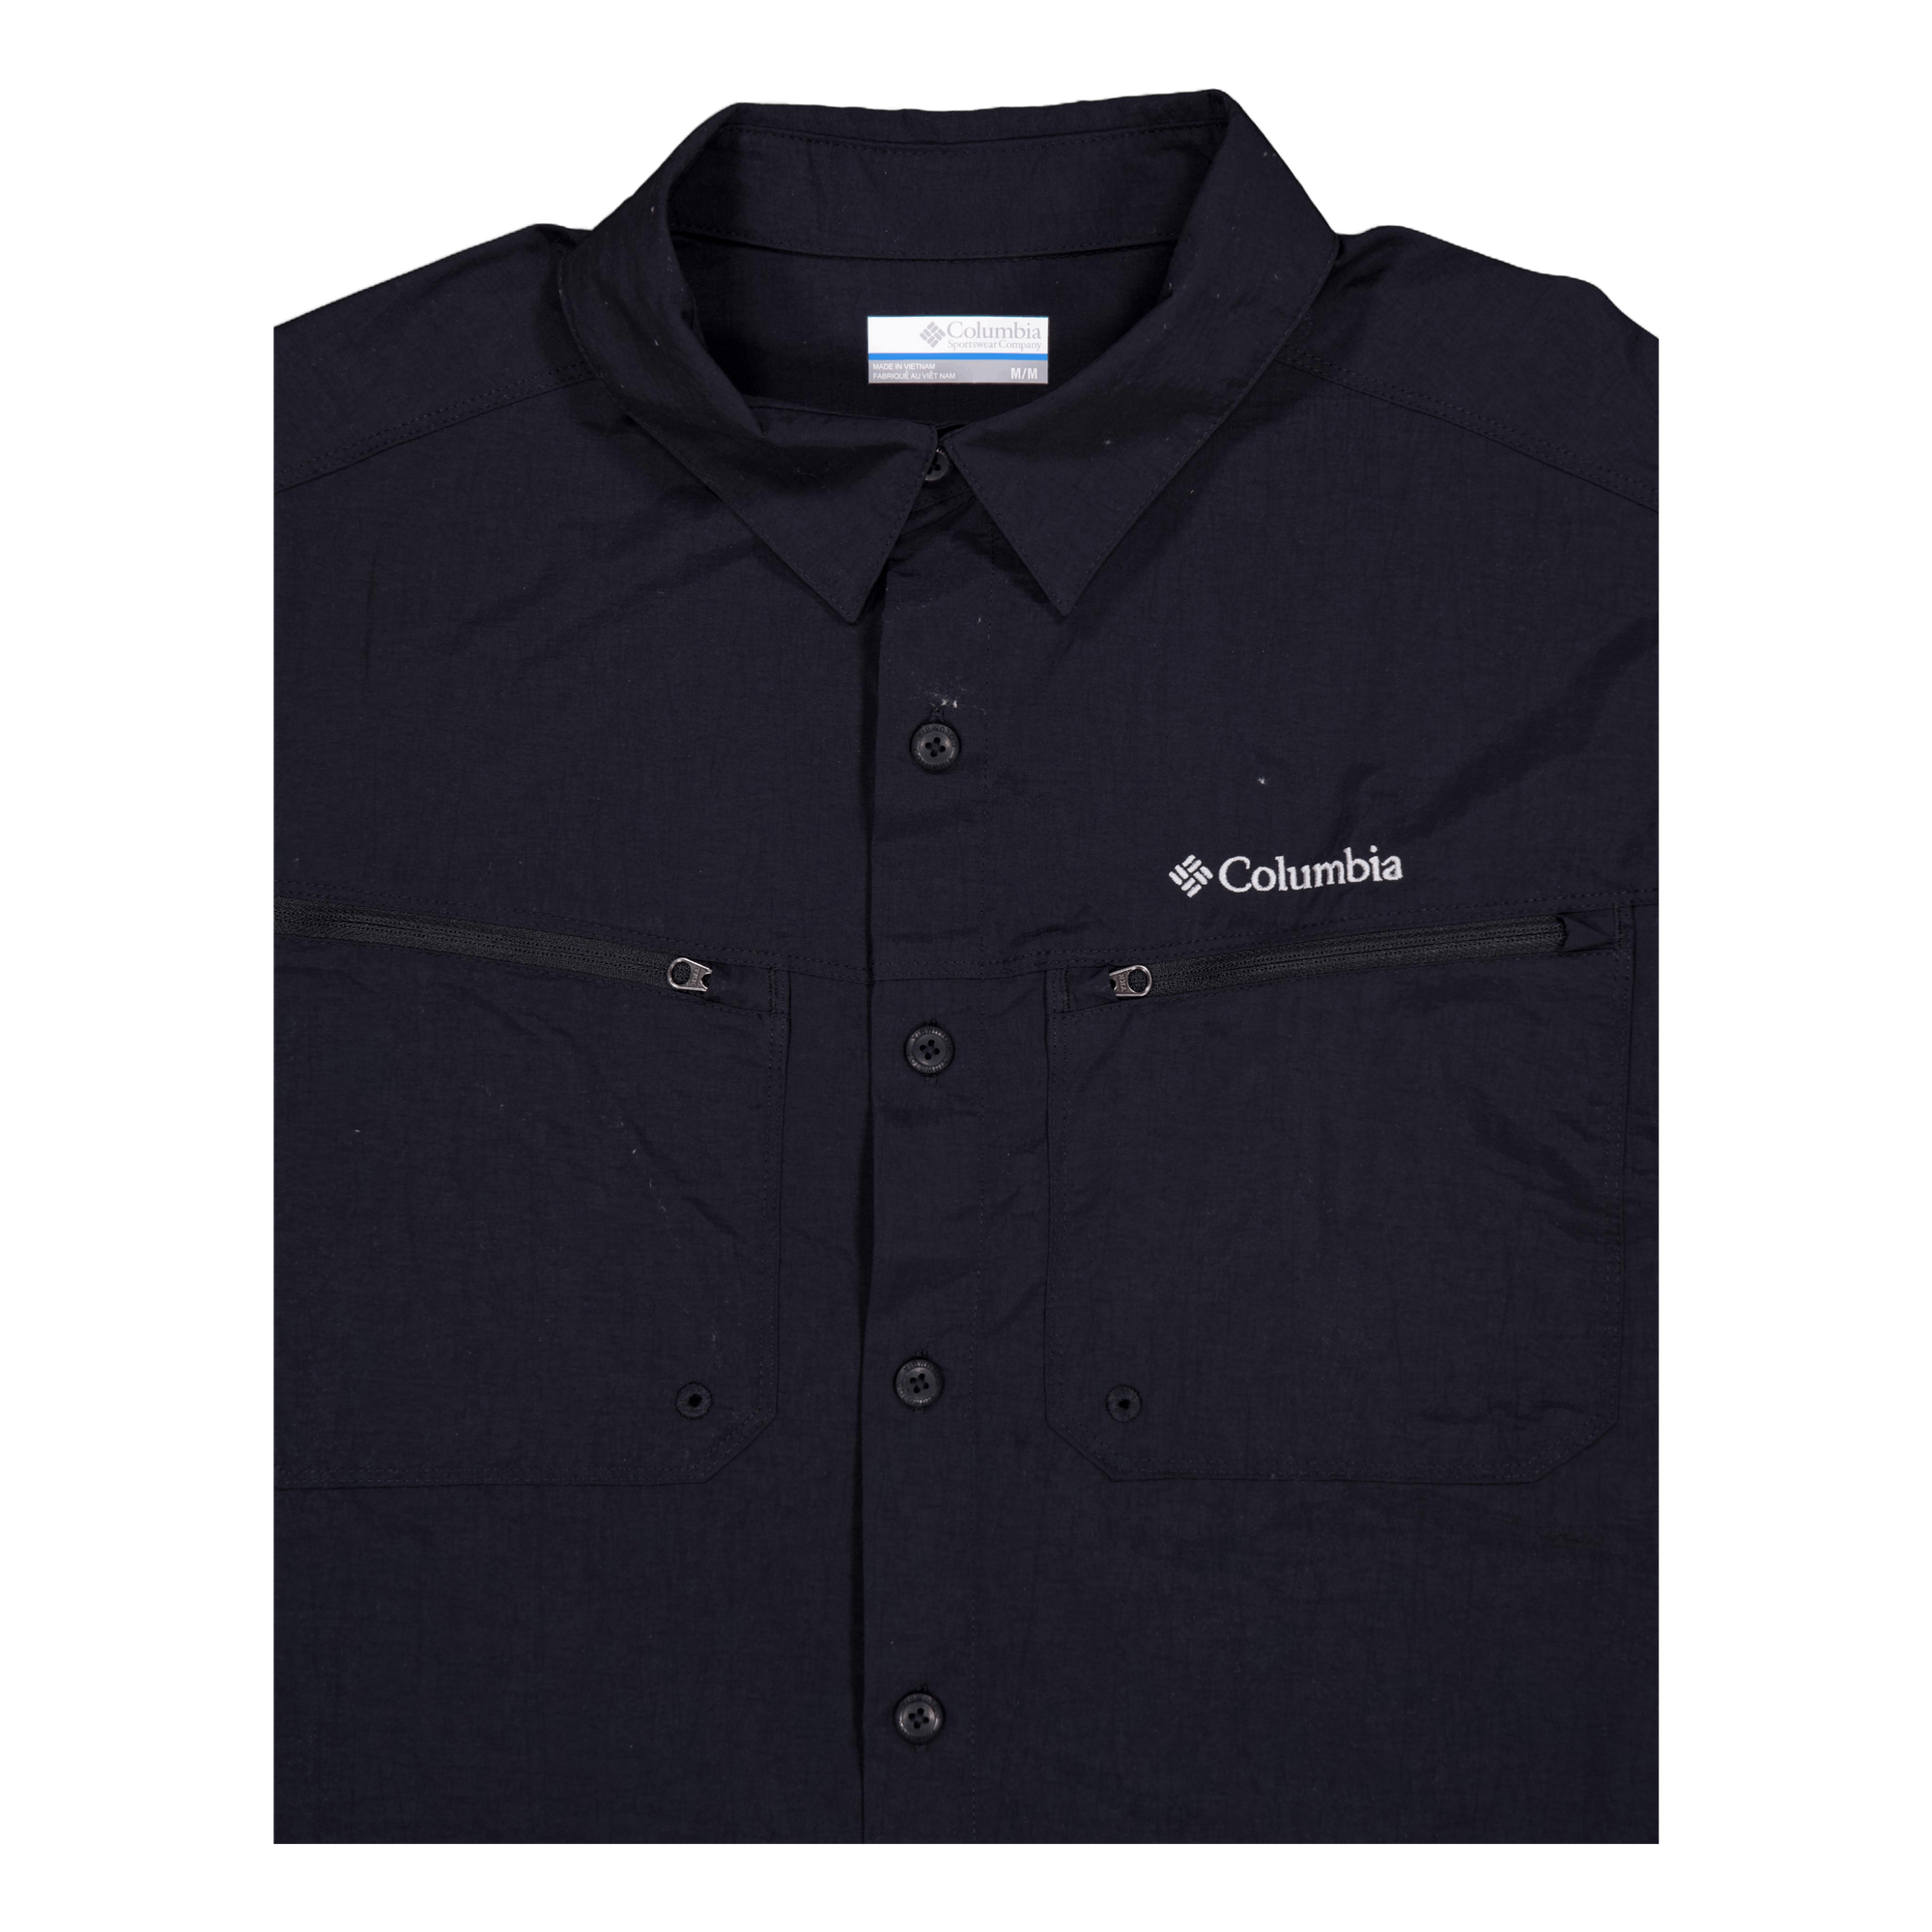 Mountaindale™ Outdoor Ss Shirt Black